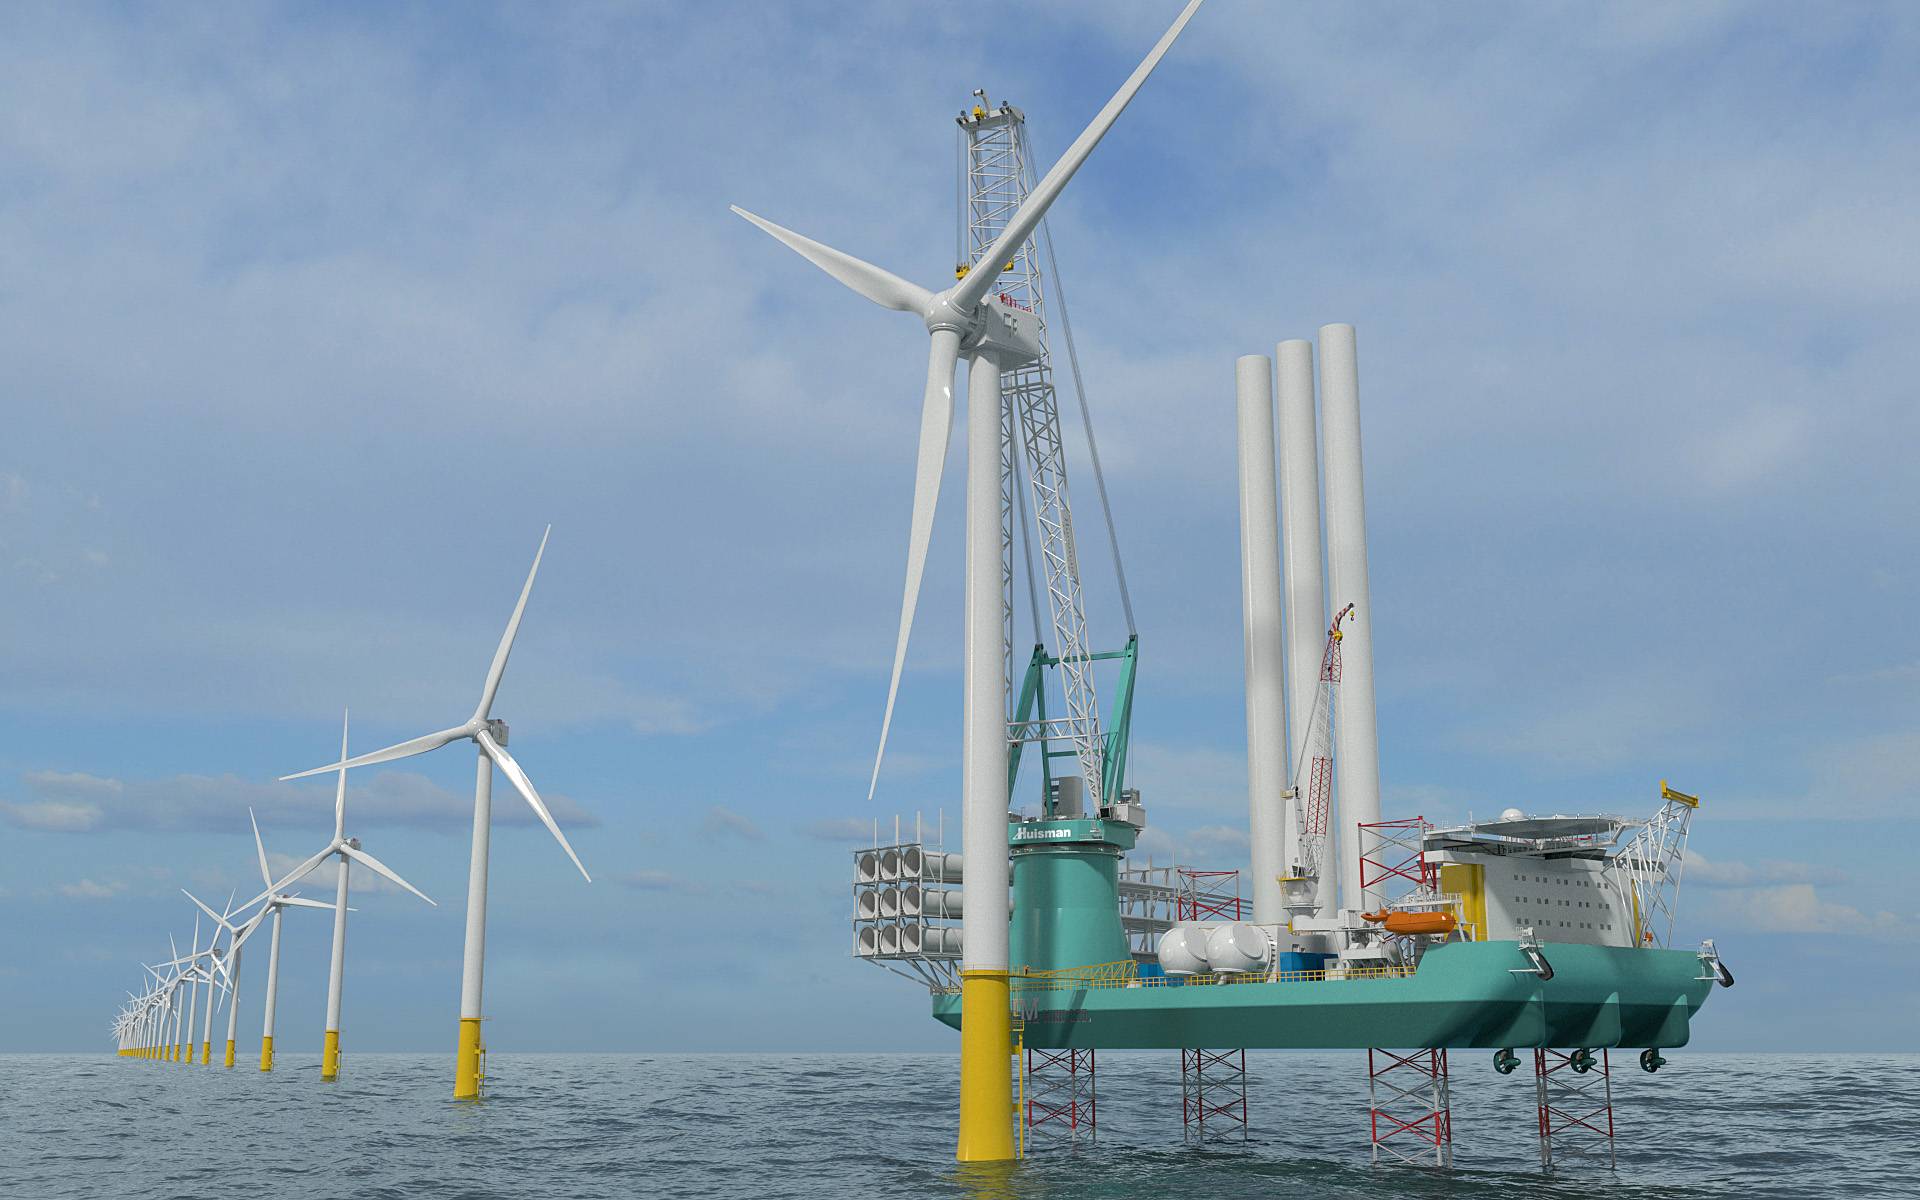 VIDEO: Huisman's Crane For OIM Wind's Offshore Wind